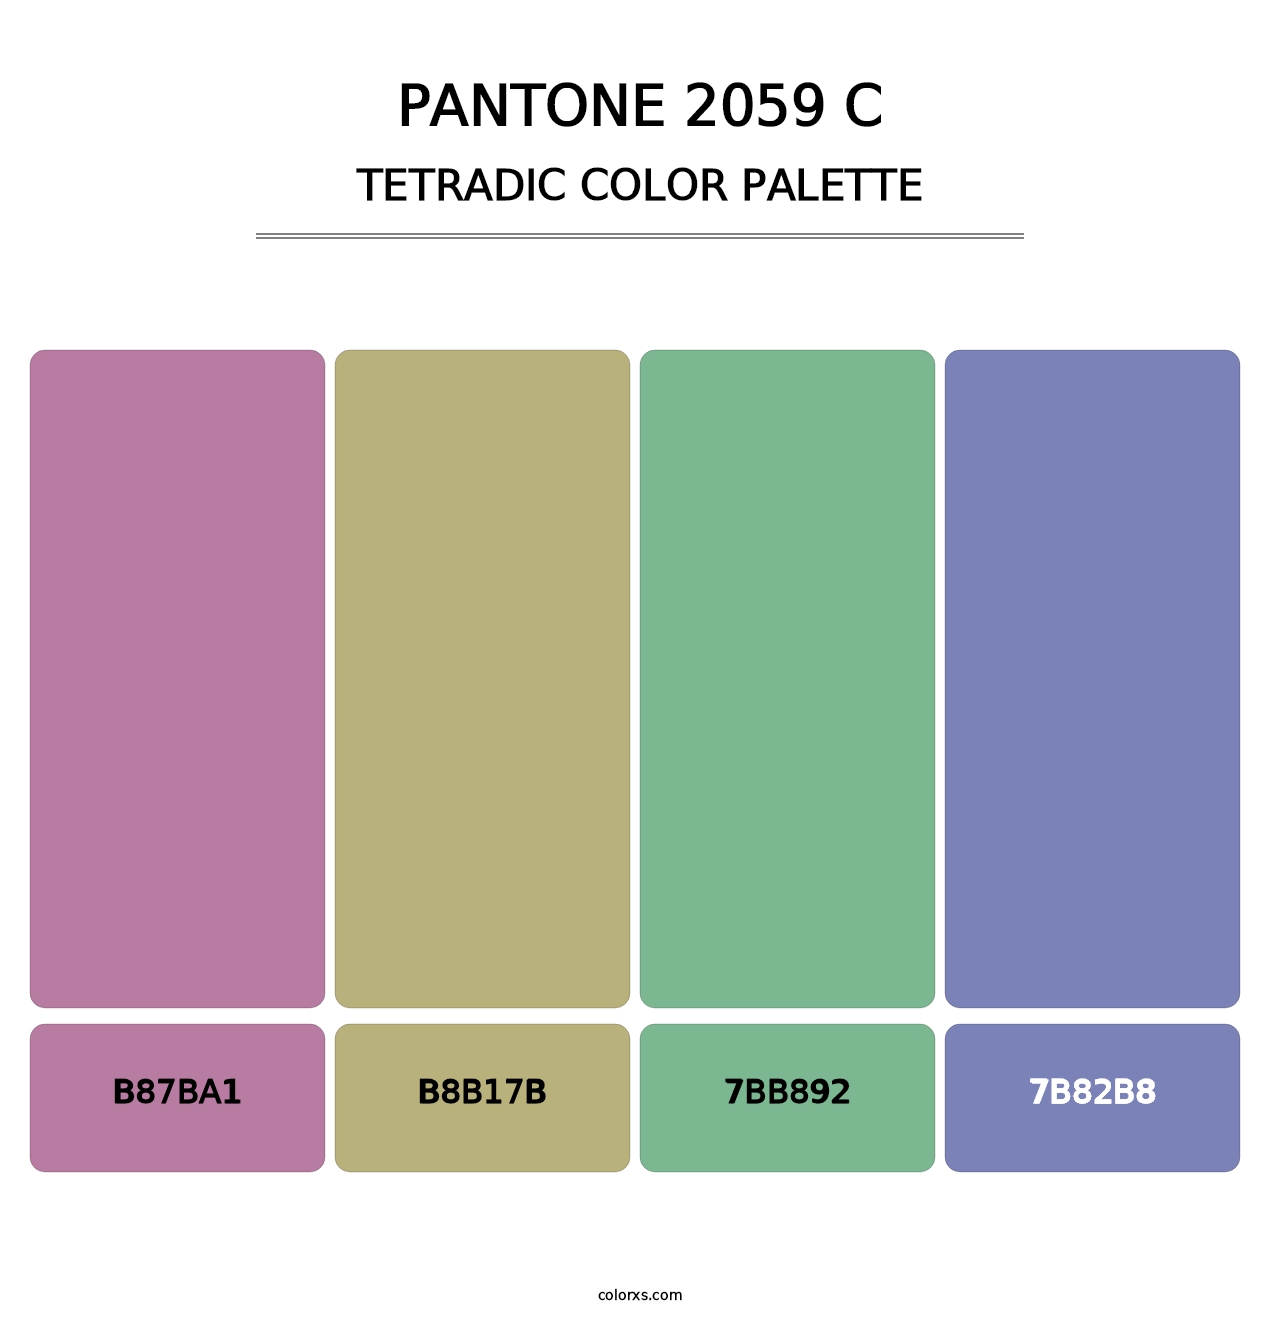 PANTONE 2059 C - Tetradic Color Palette